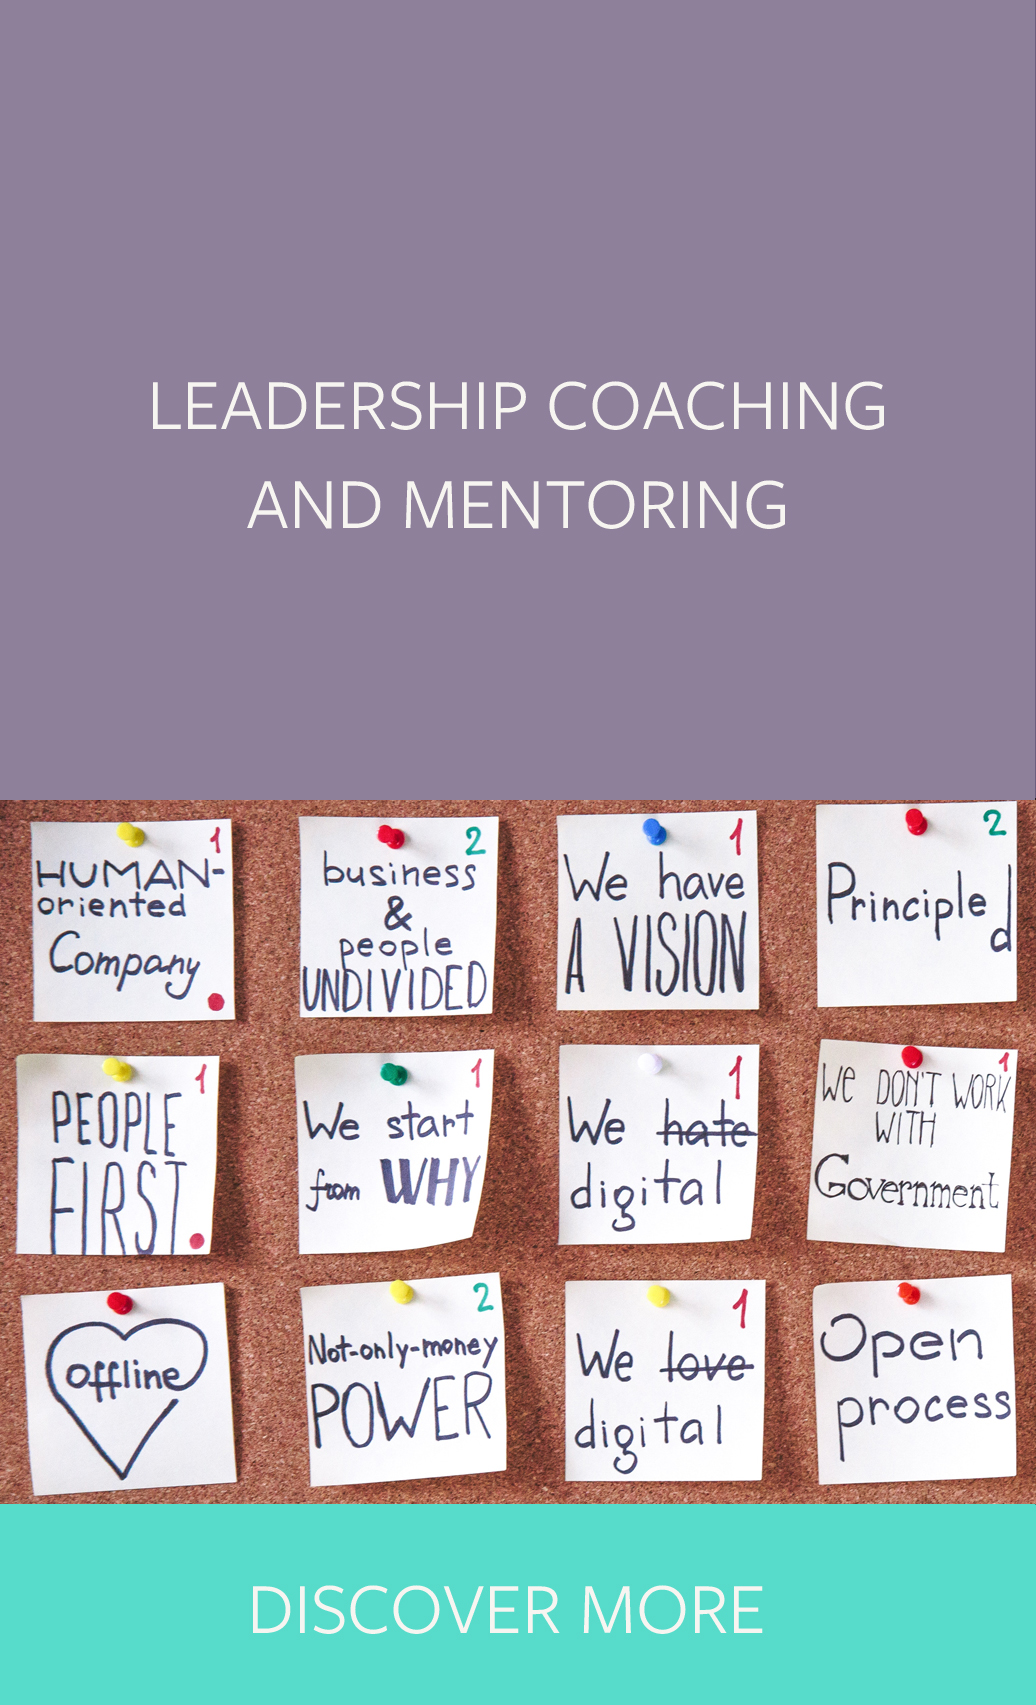 Leadership Coaching and mentoring